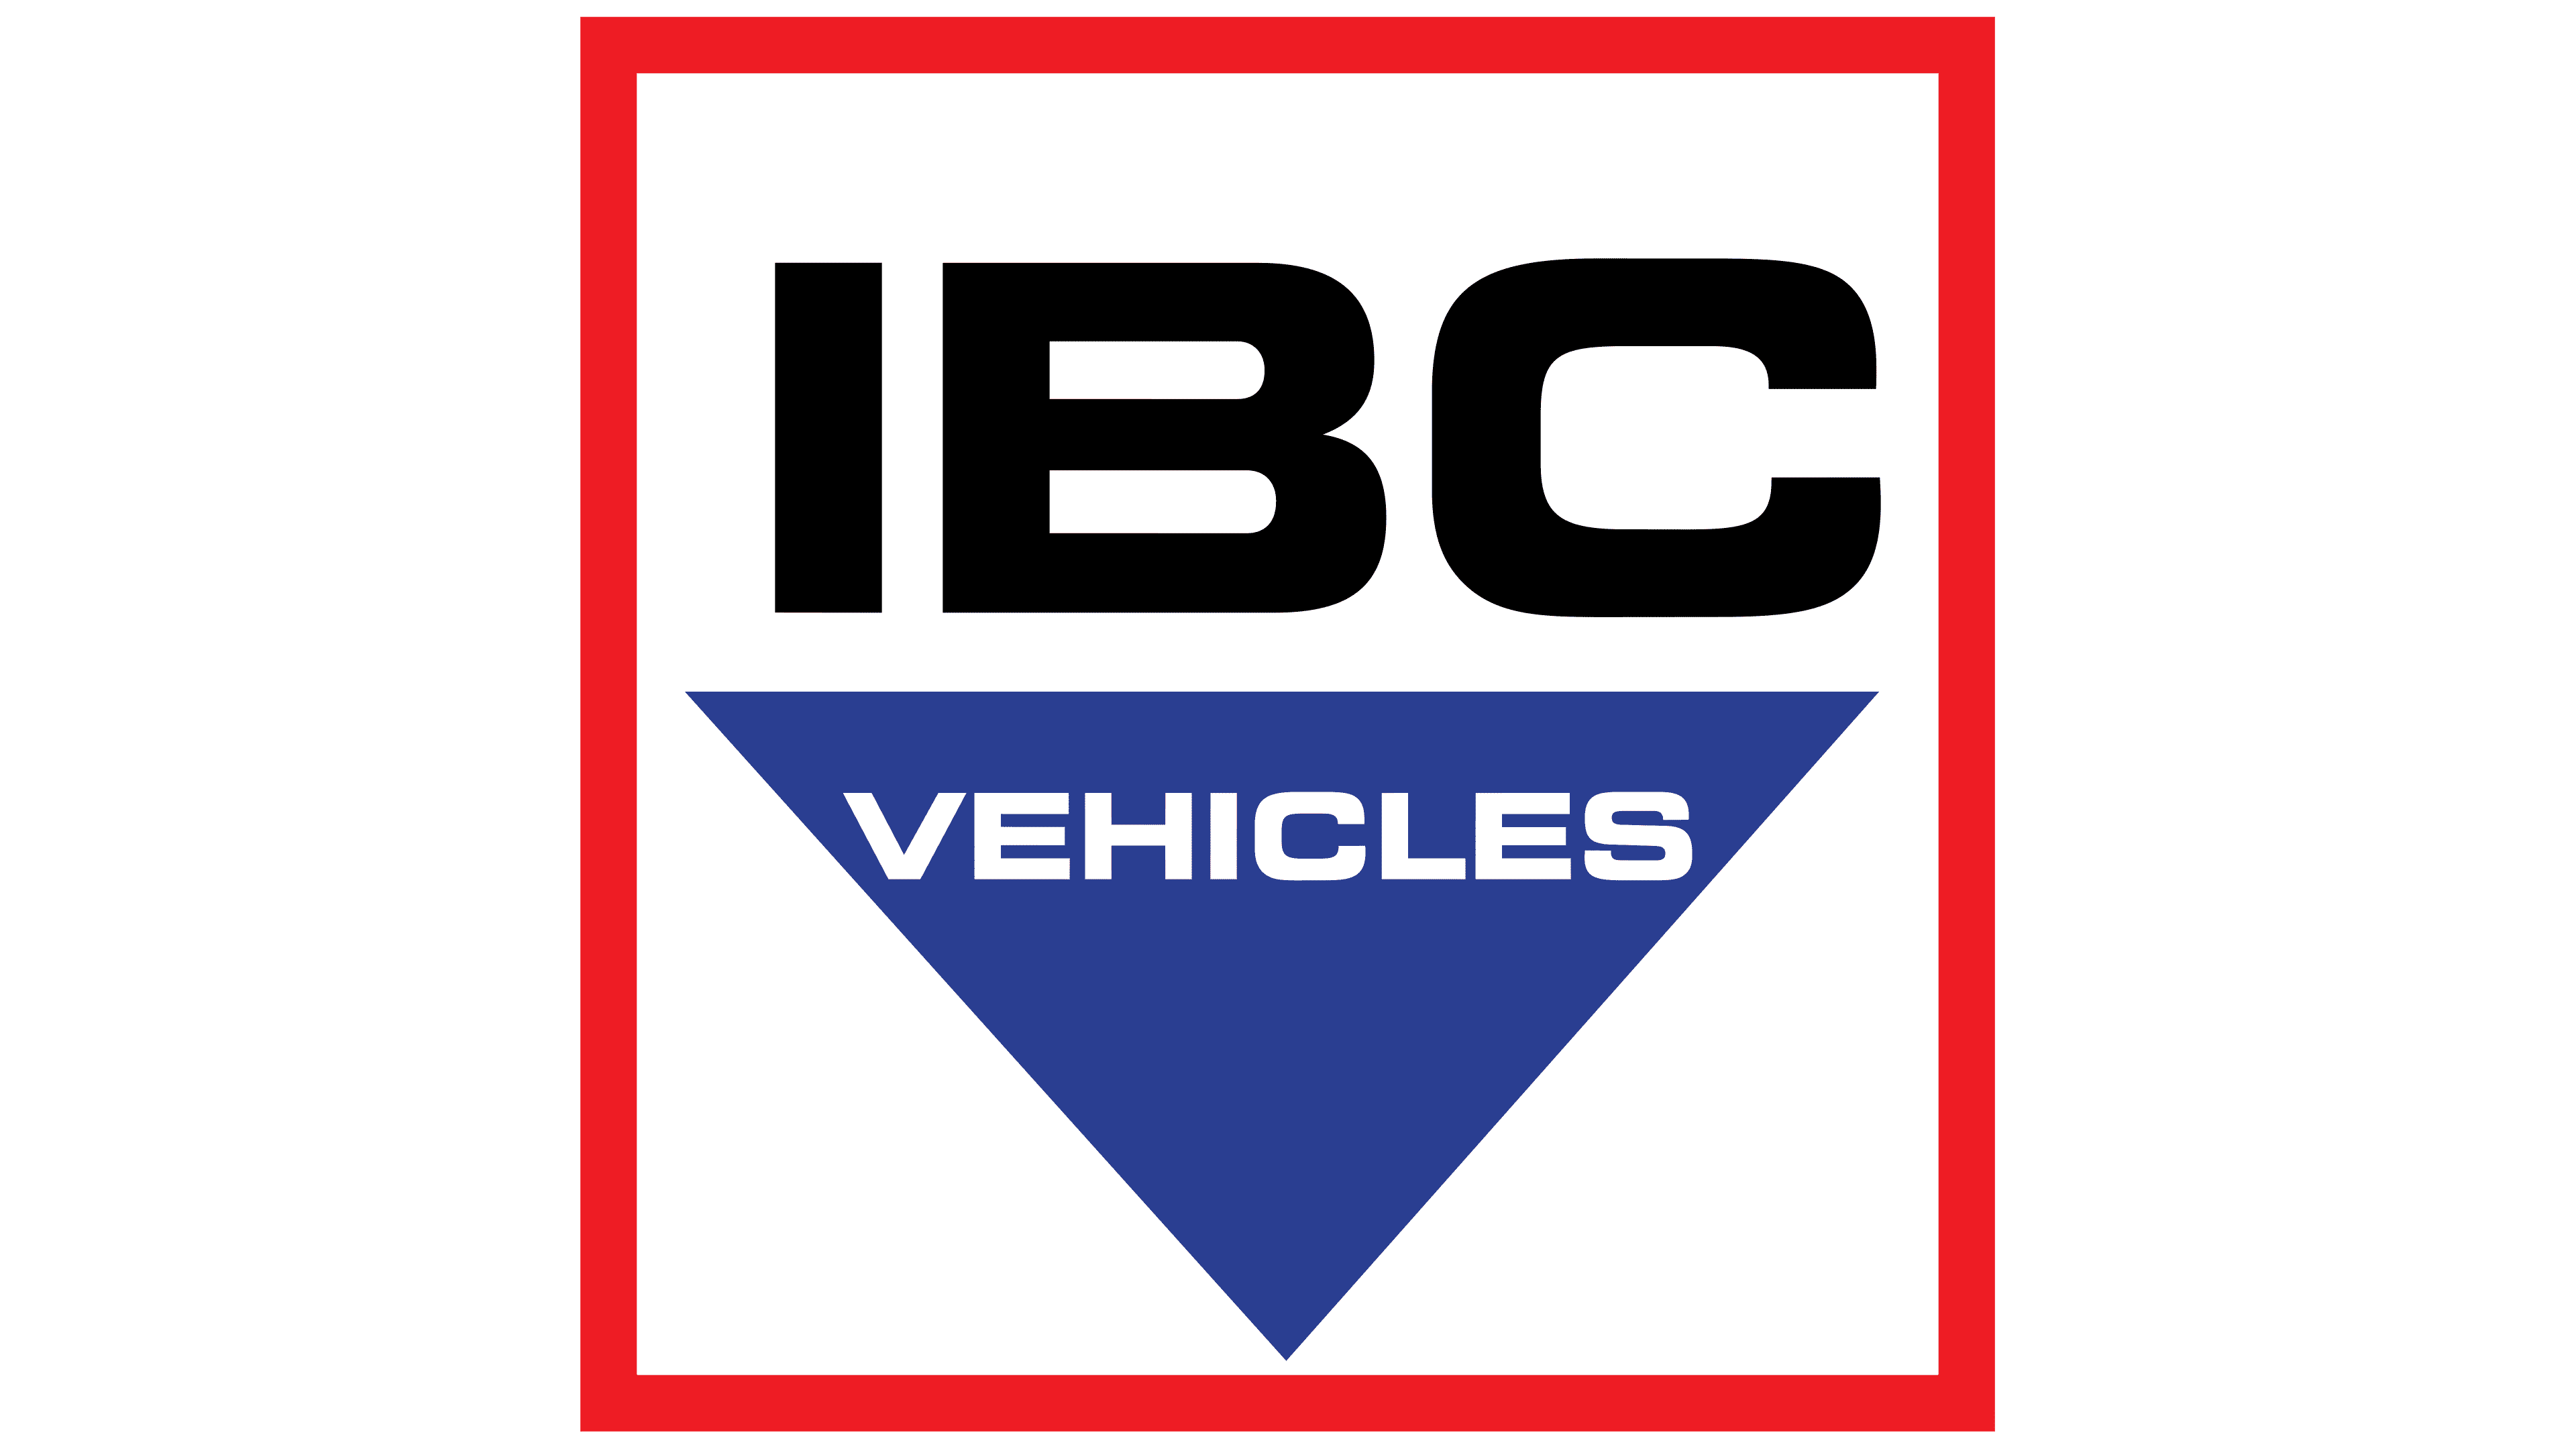 IBC Vehicles Transparent Logo PNG